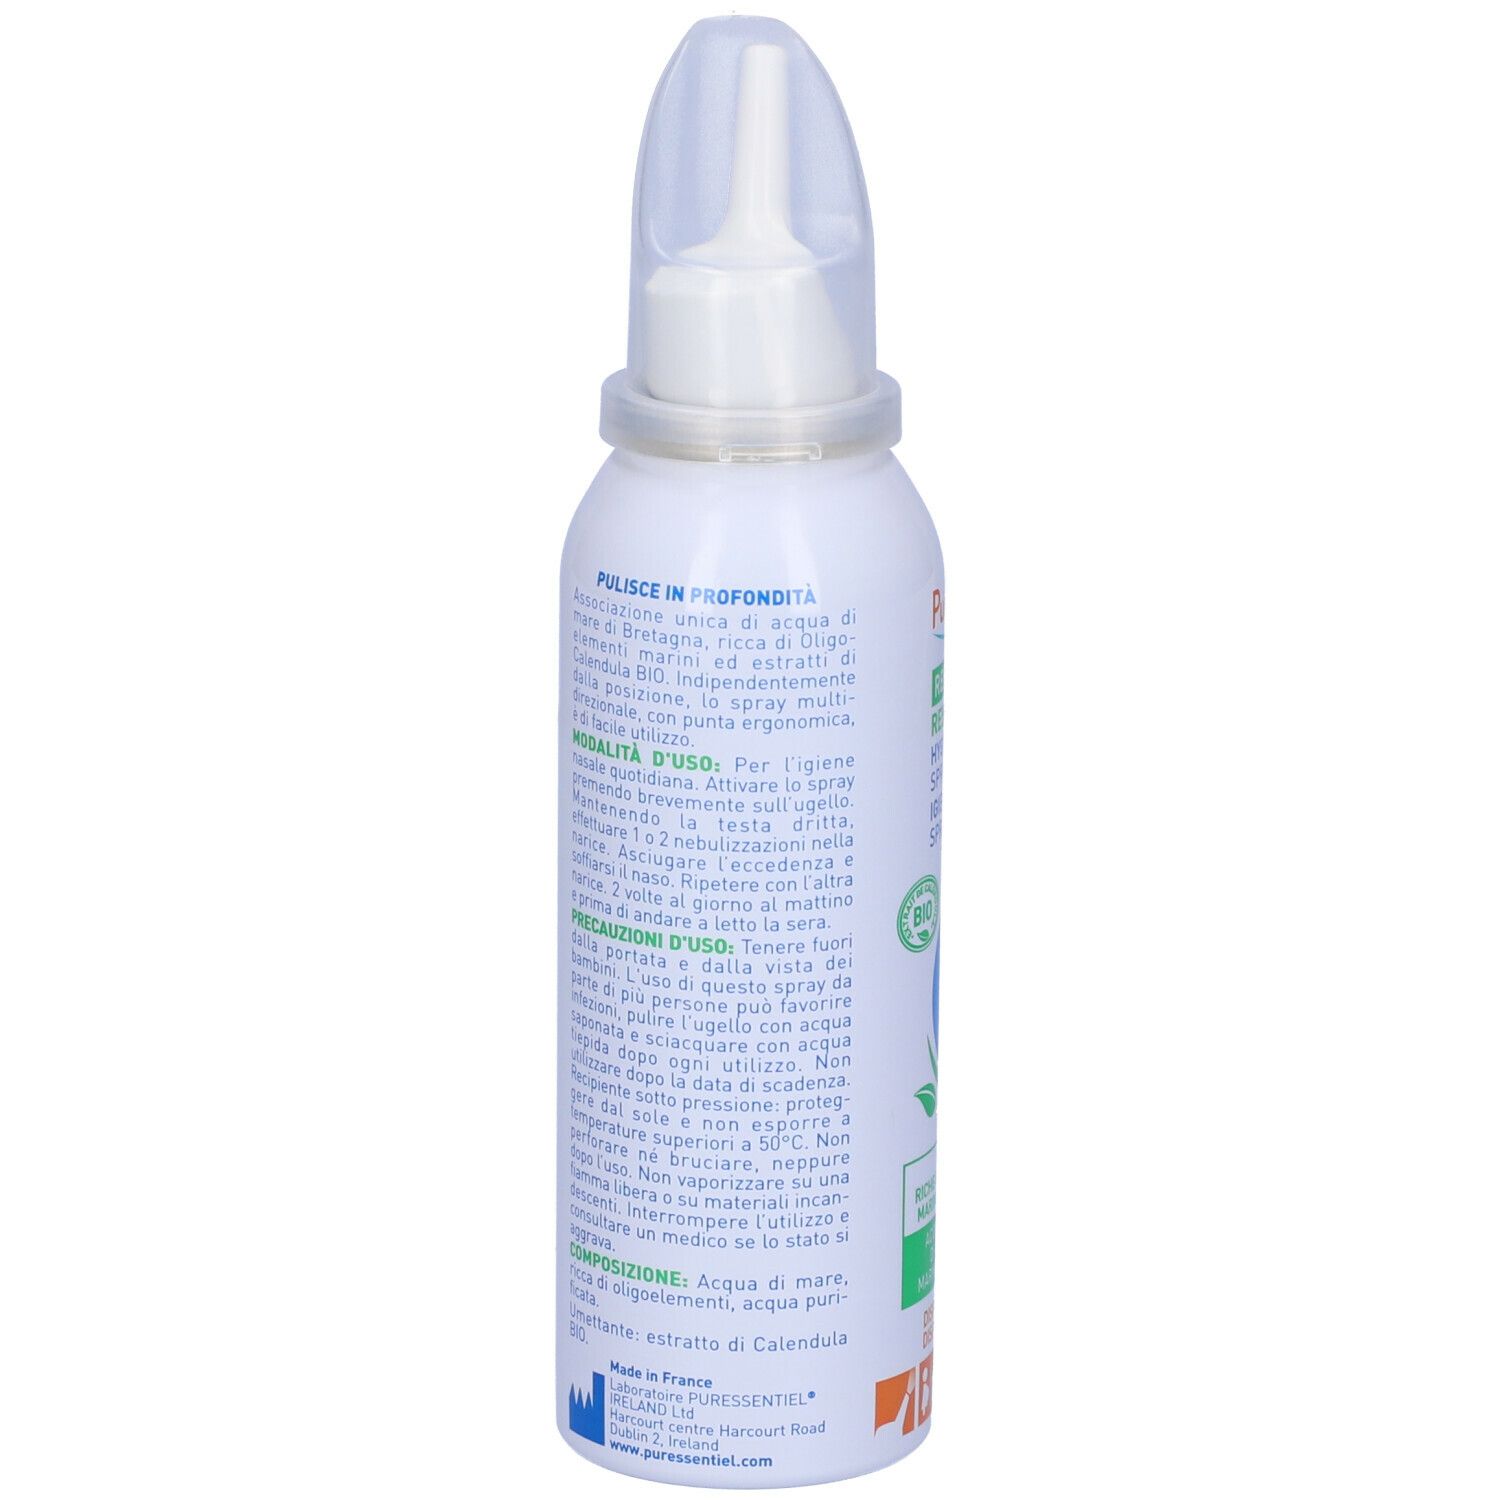 Puressentiel Respiratory Nasal Hygiene Strong Jet Spray